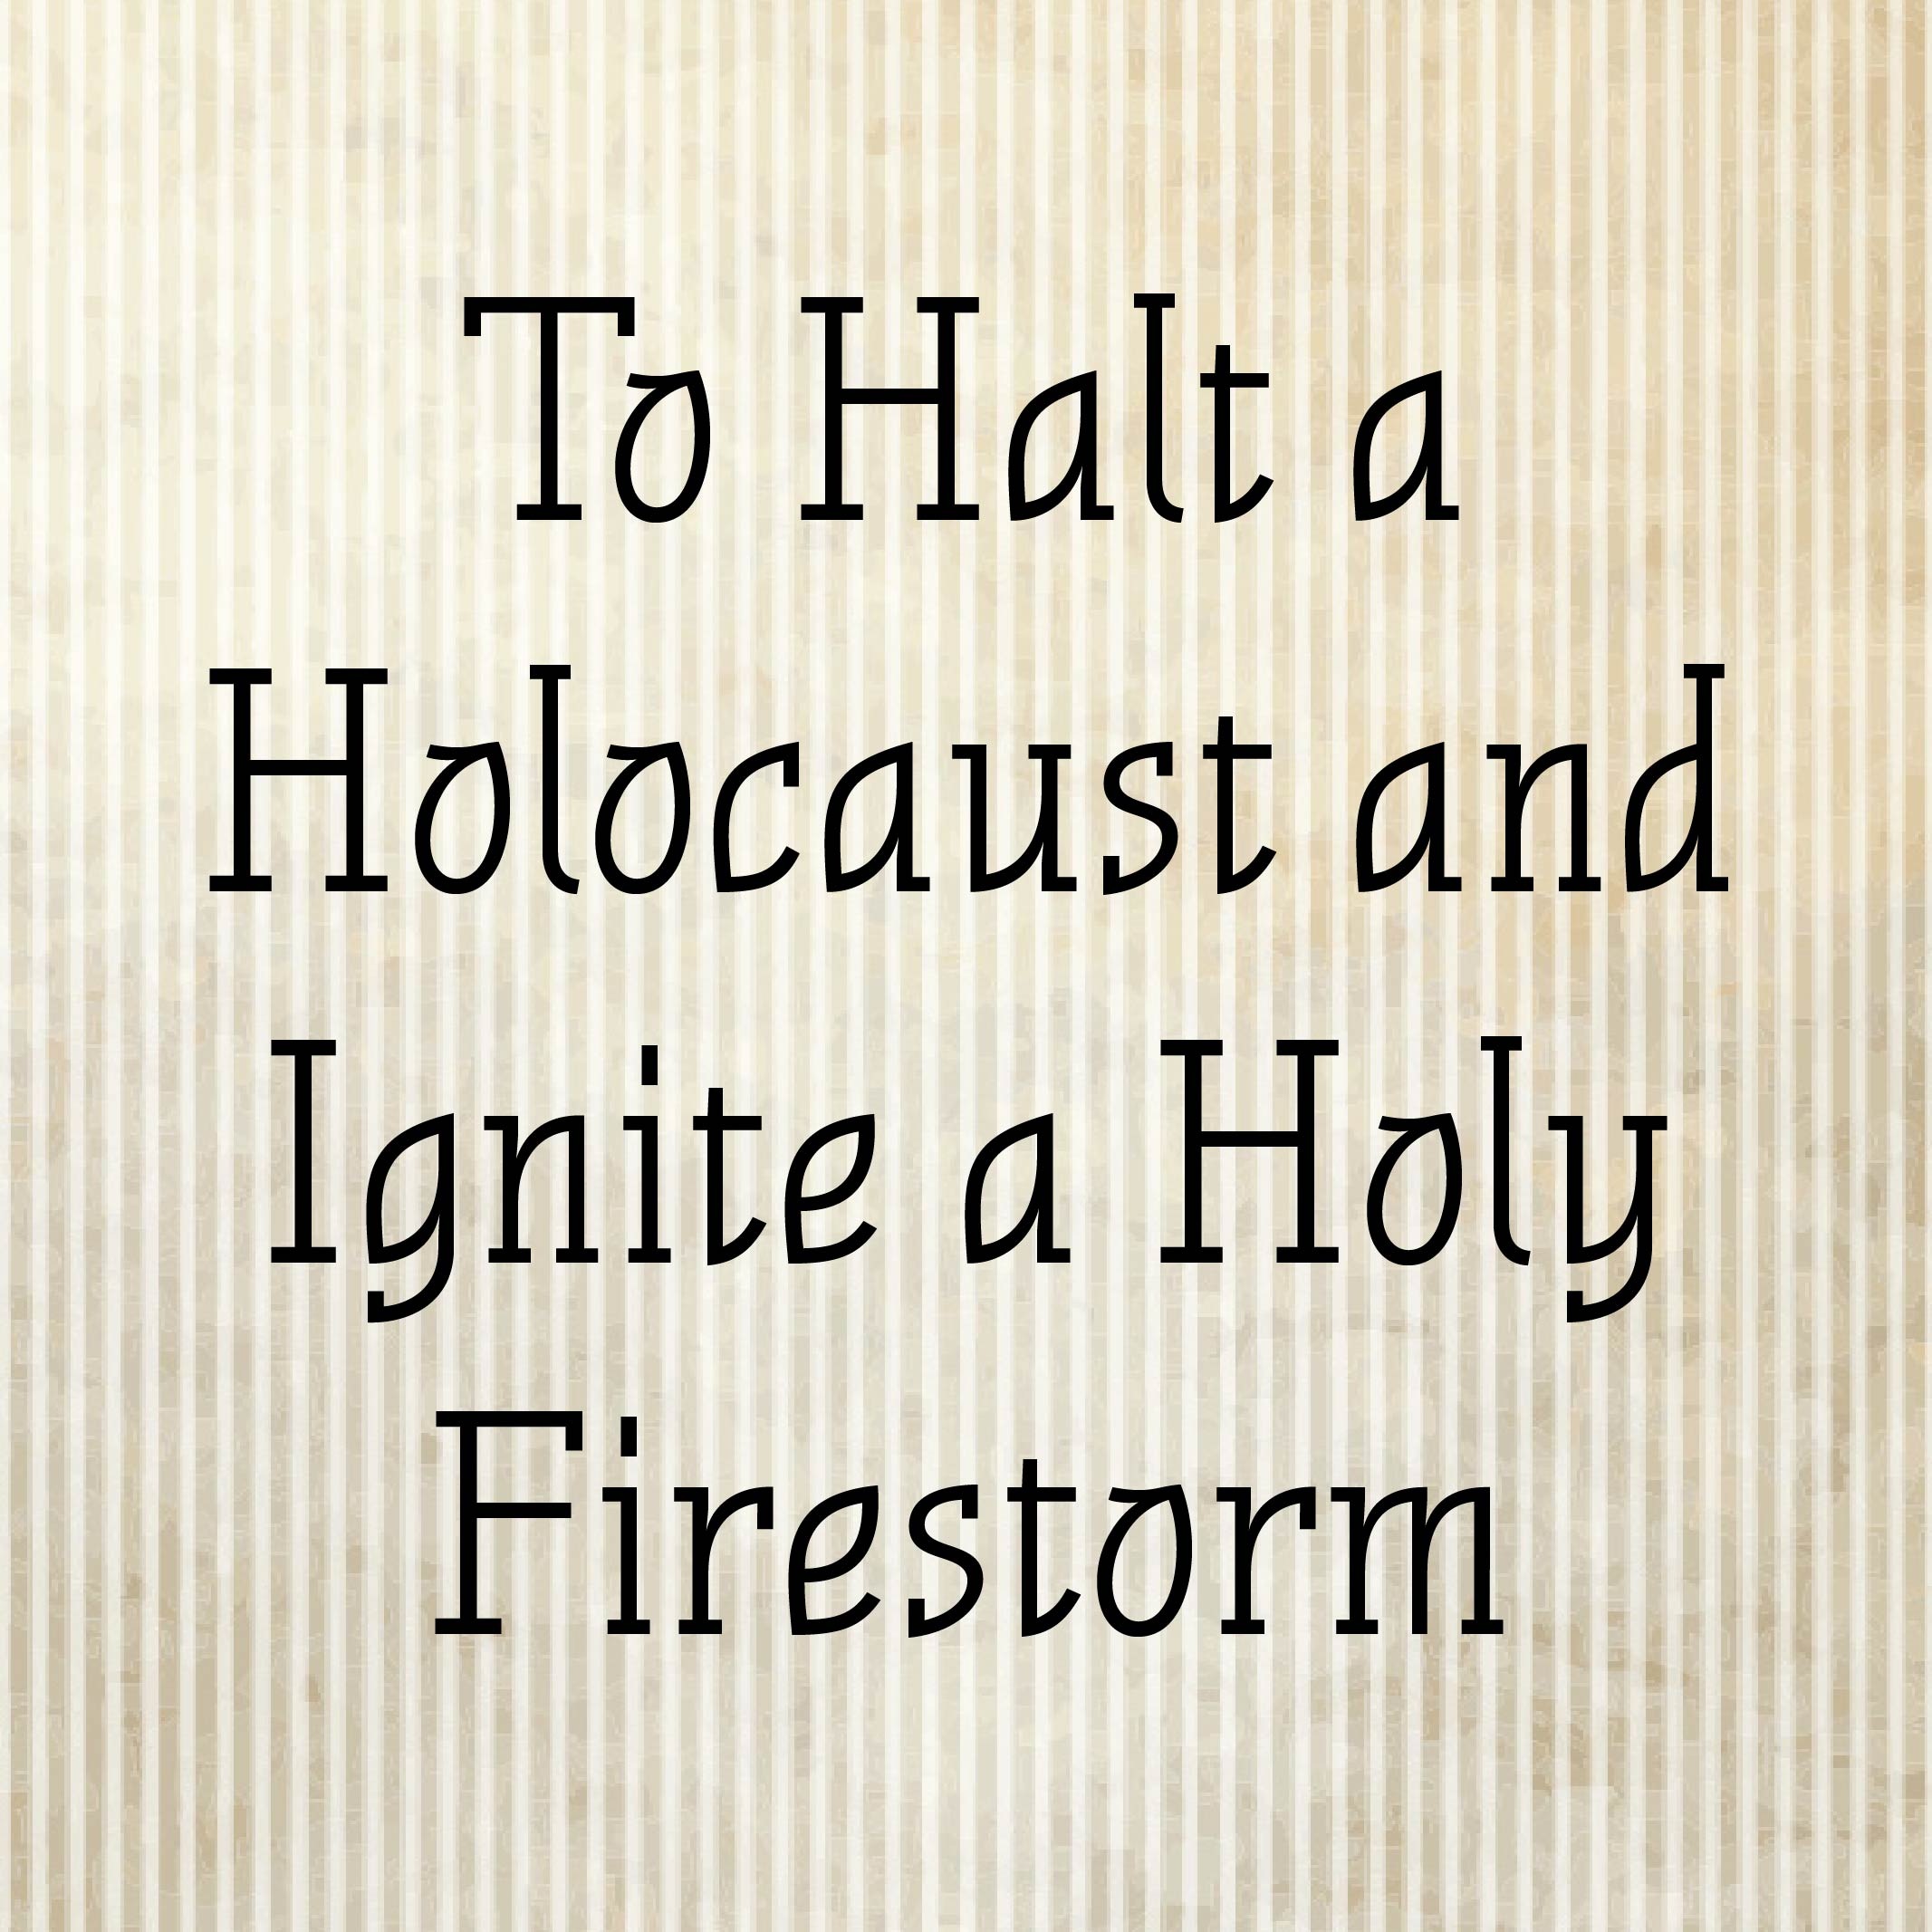 To Halt a Holocaust and Ignite a Holy Firestorm